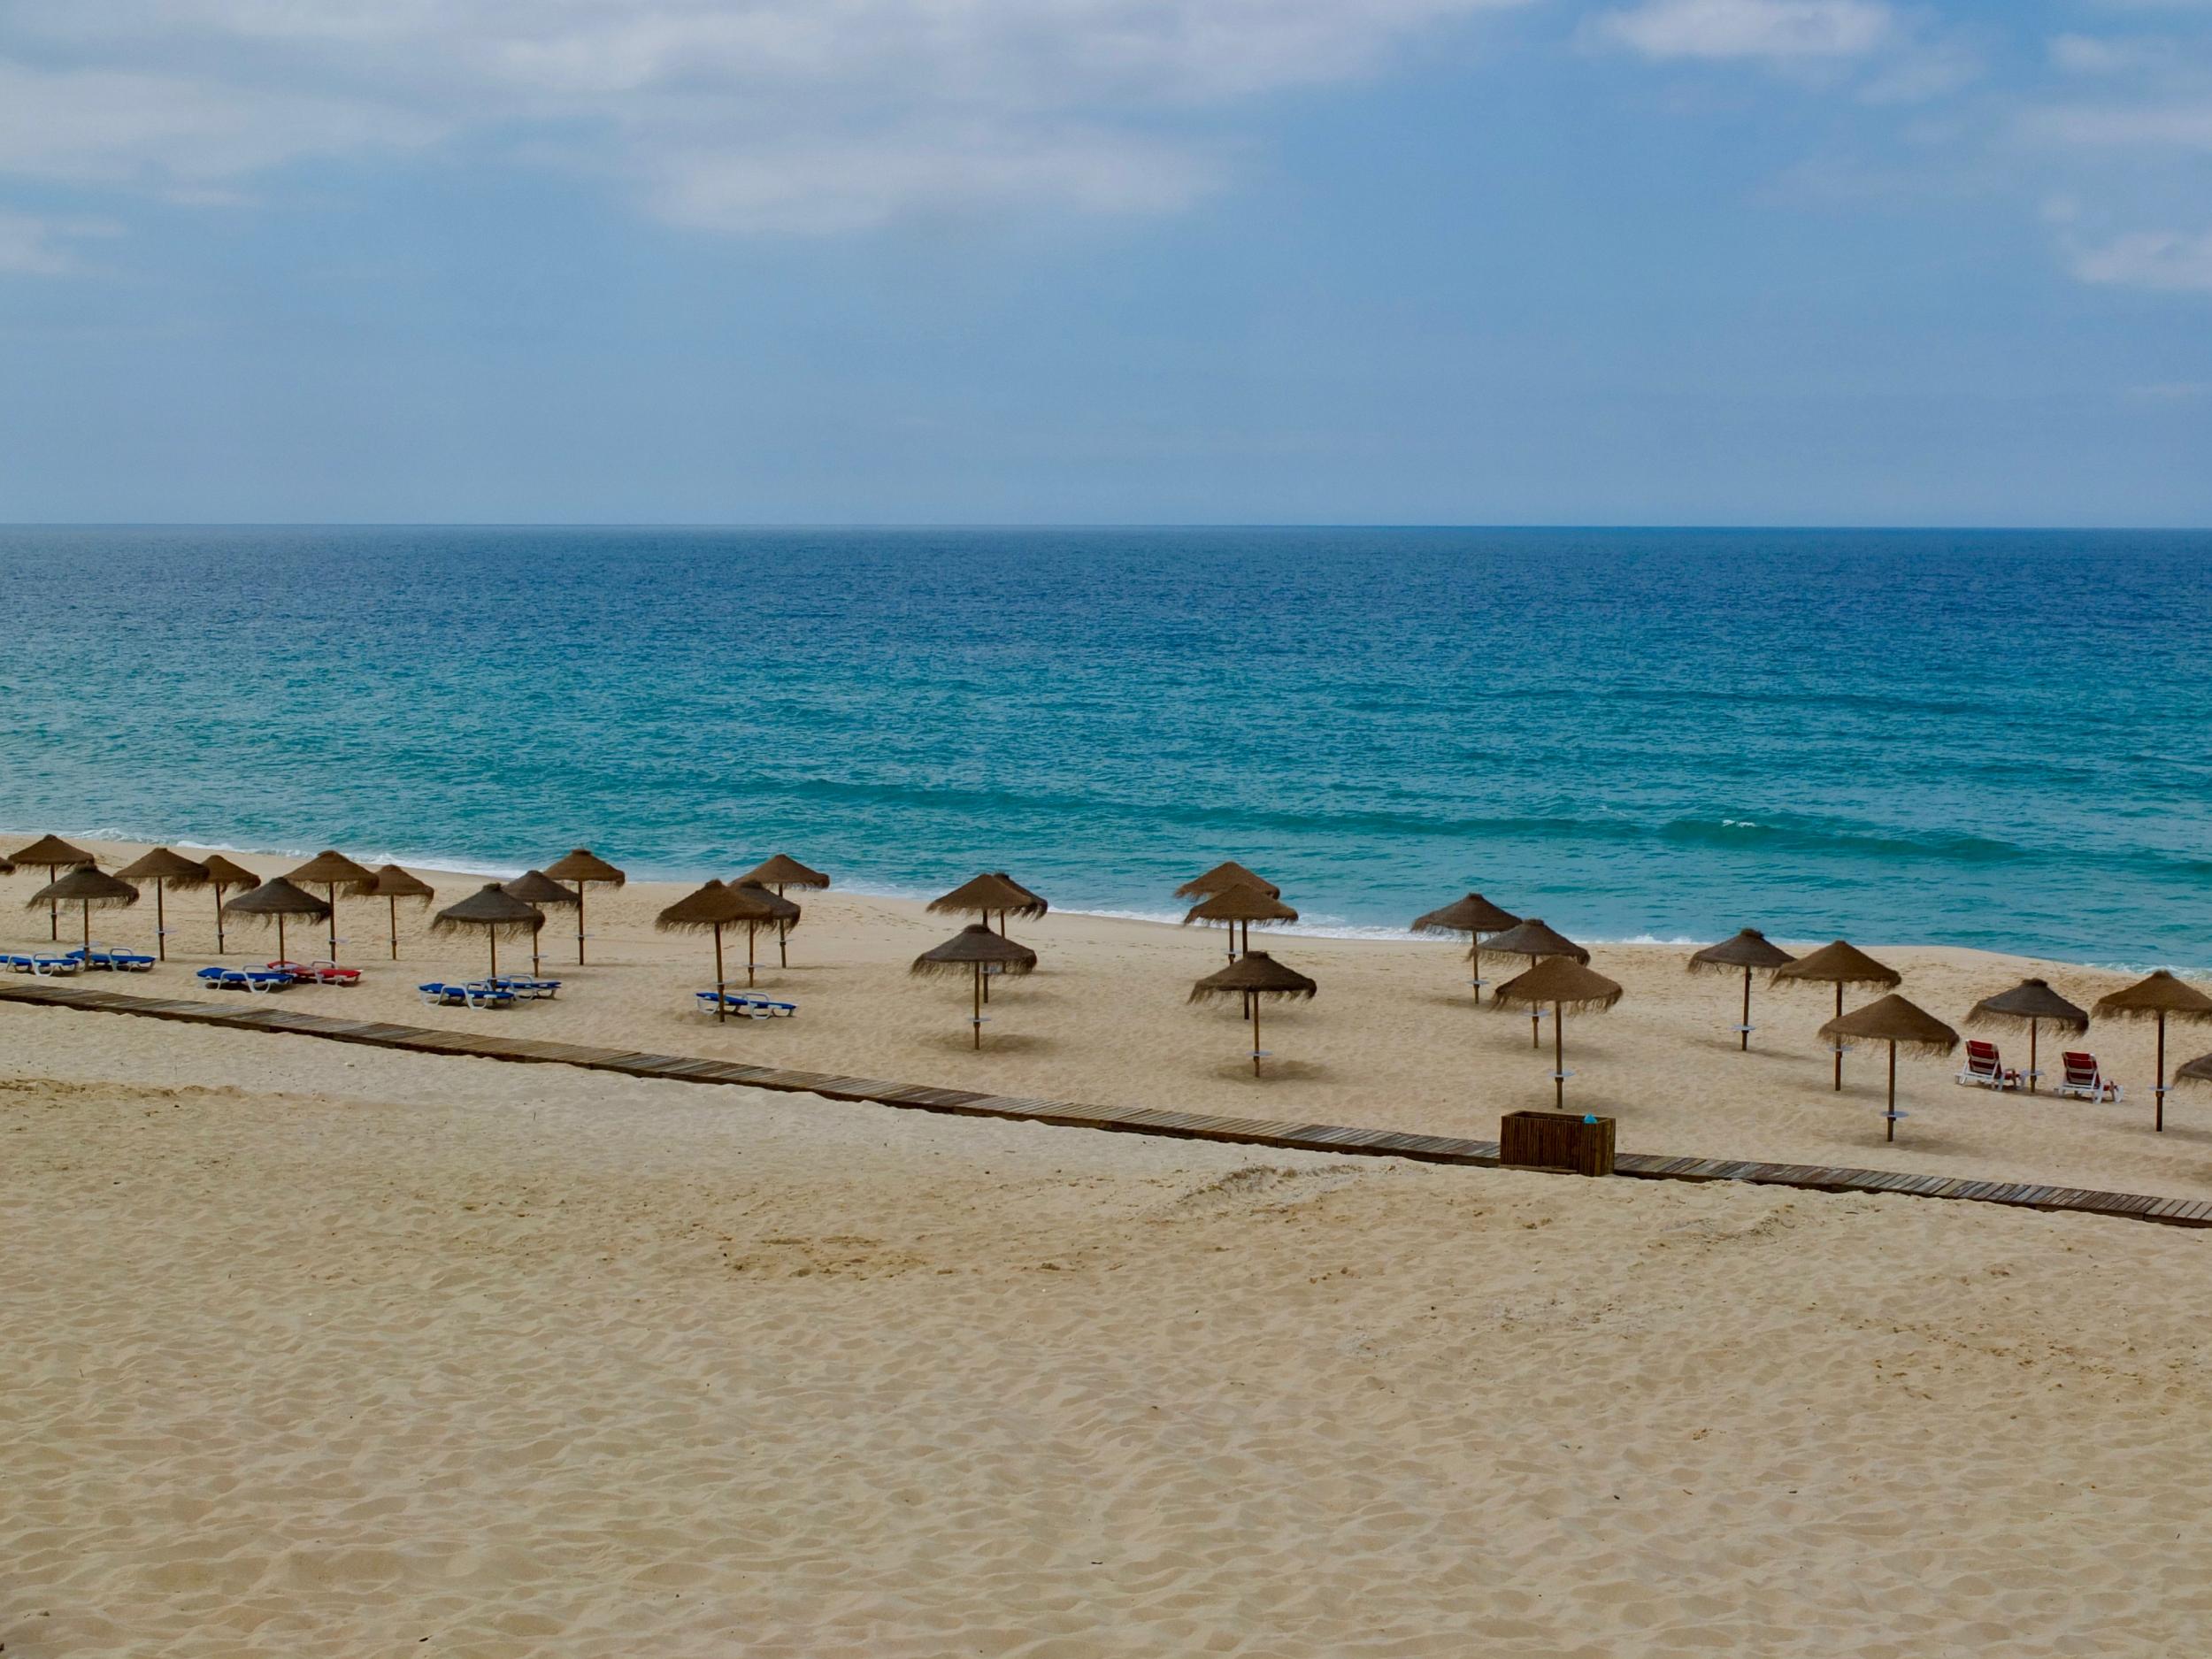 Unlike the Algarve, Comporta’s beaches are fairly undeveloped